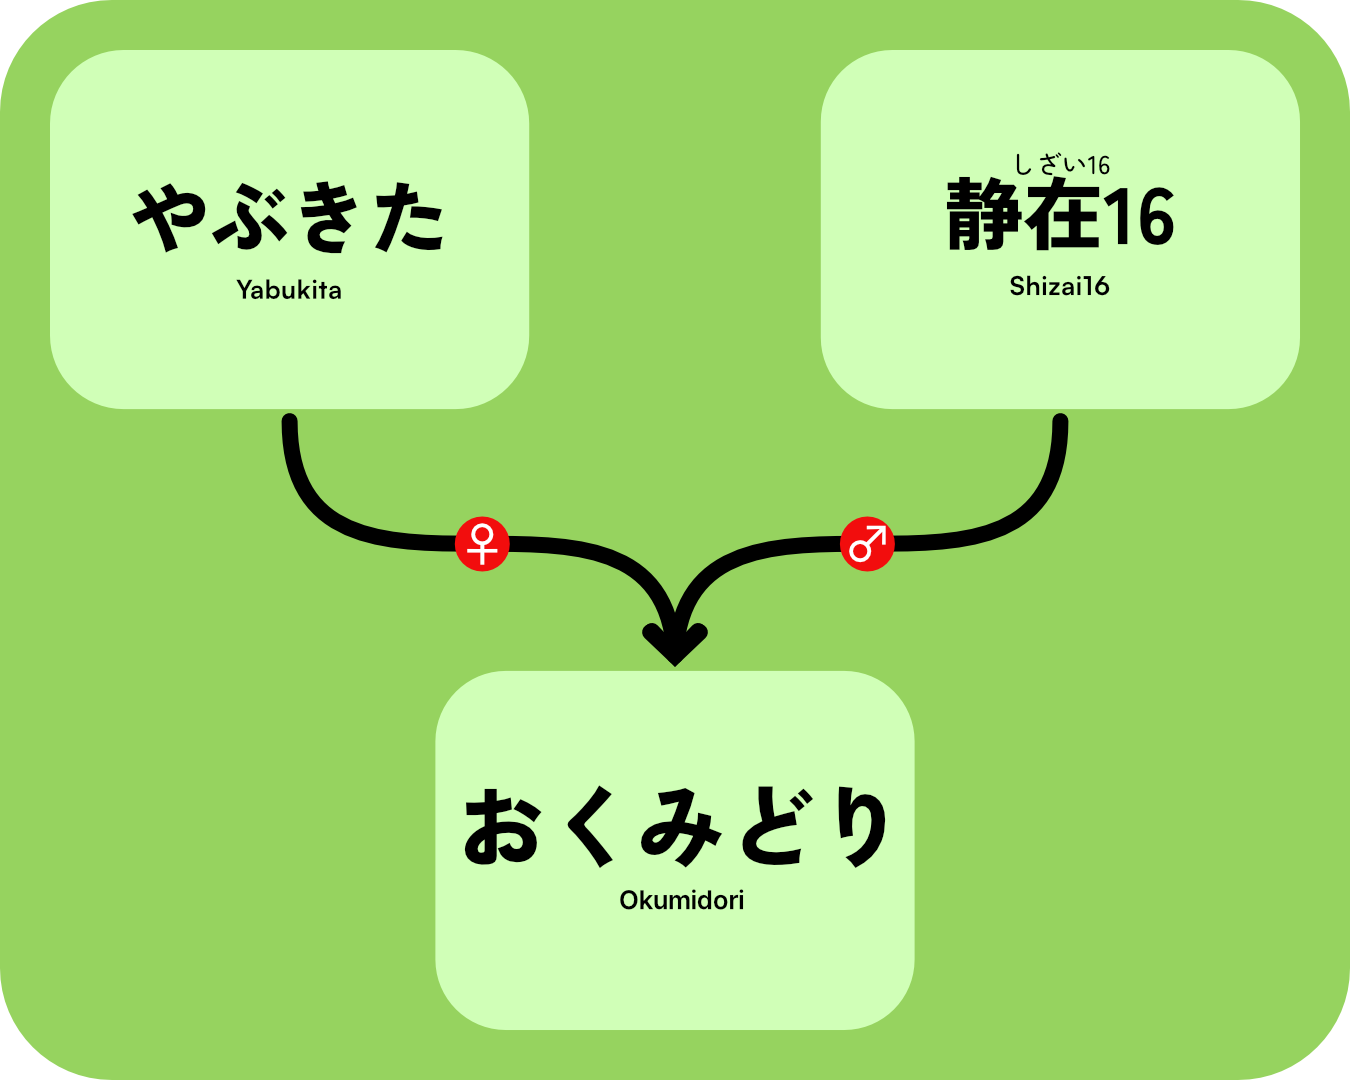 Genealogy tree the Okumidori cultivar